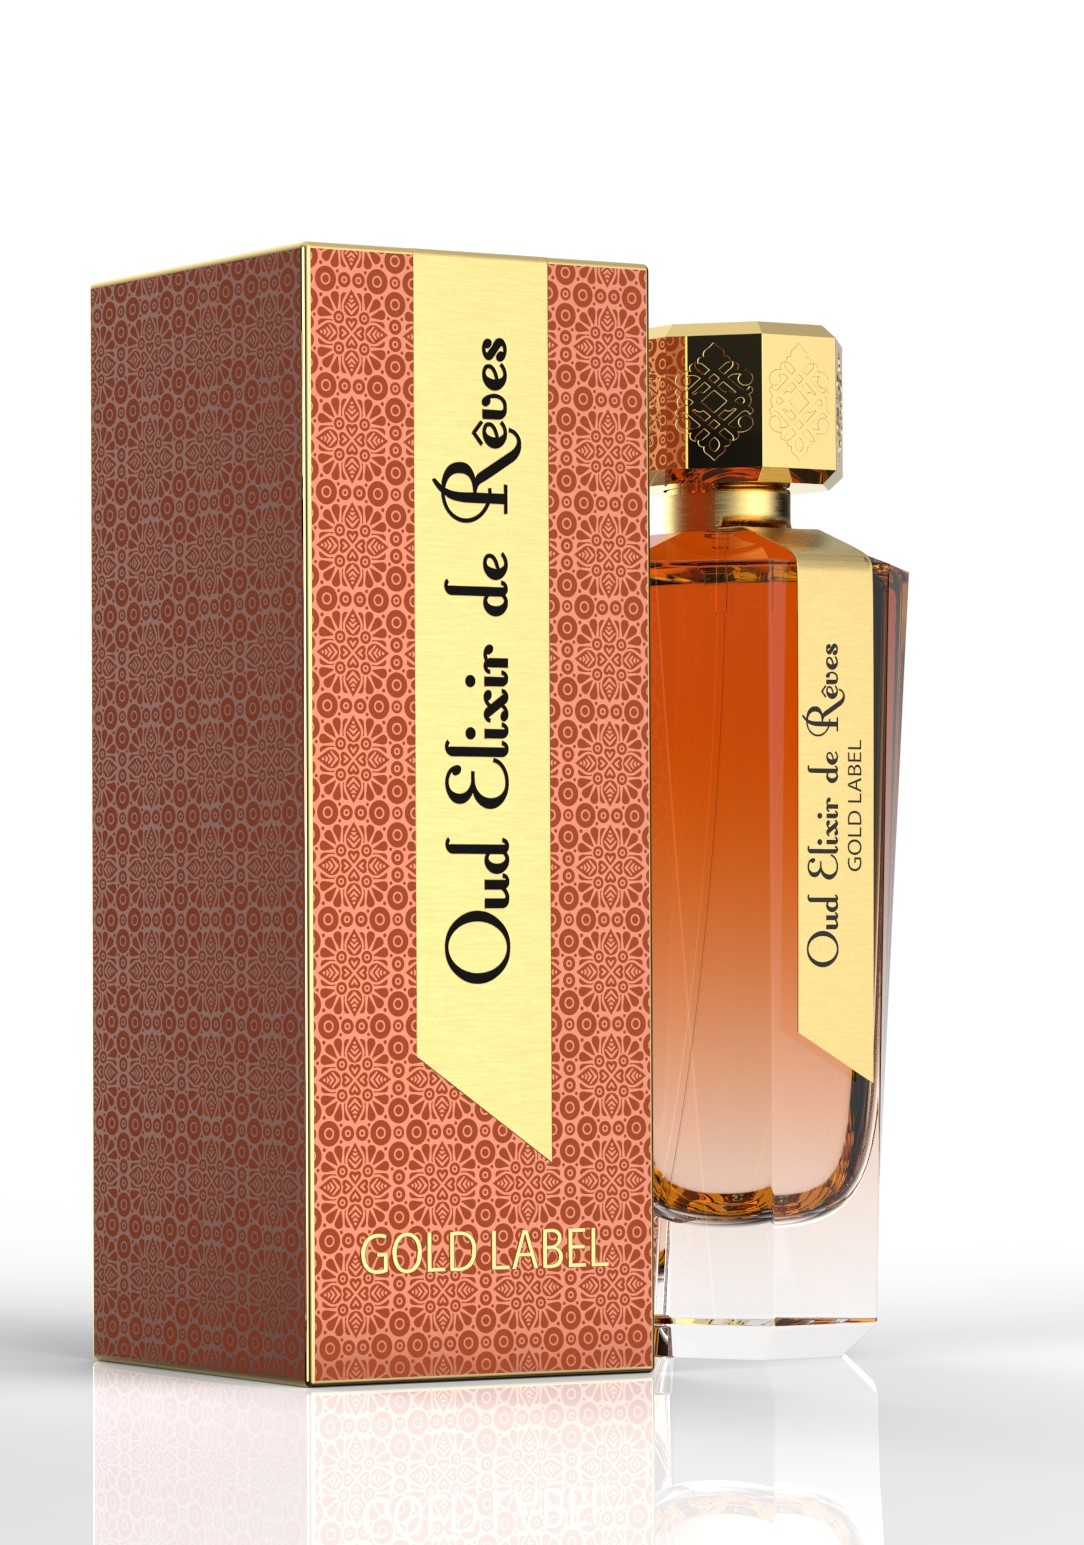 Featured image for “Oud Elixir d’Extase Gold Label”